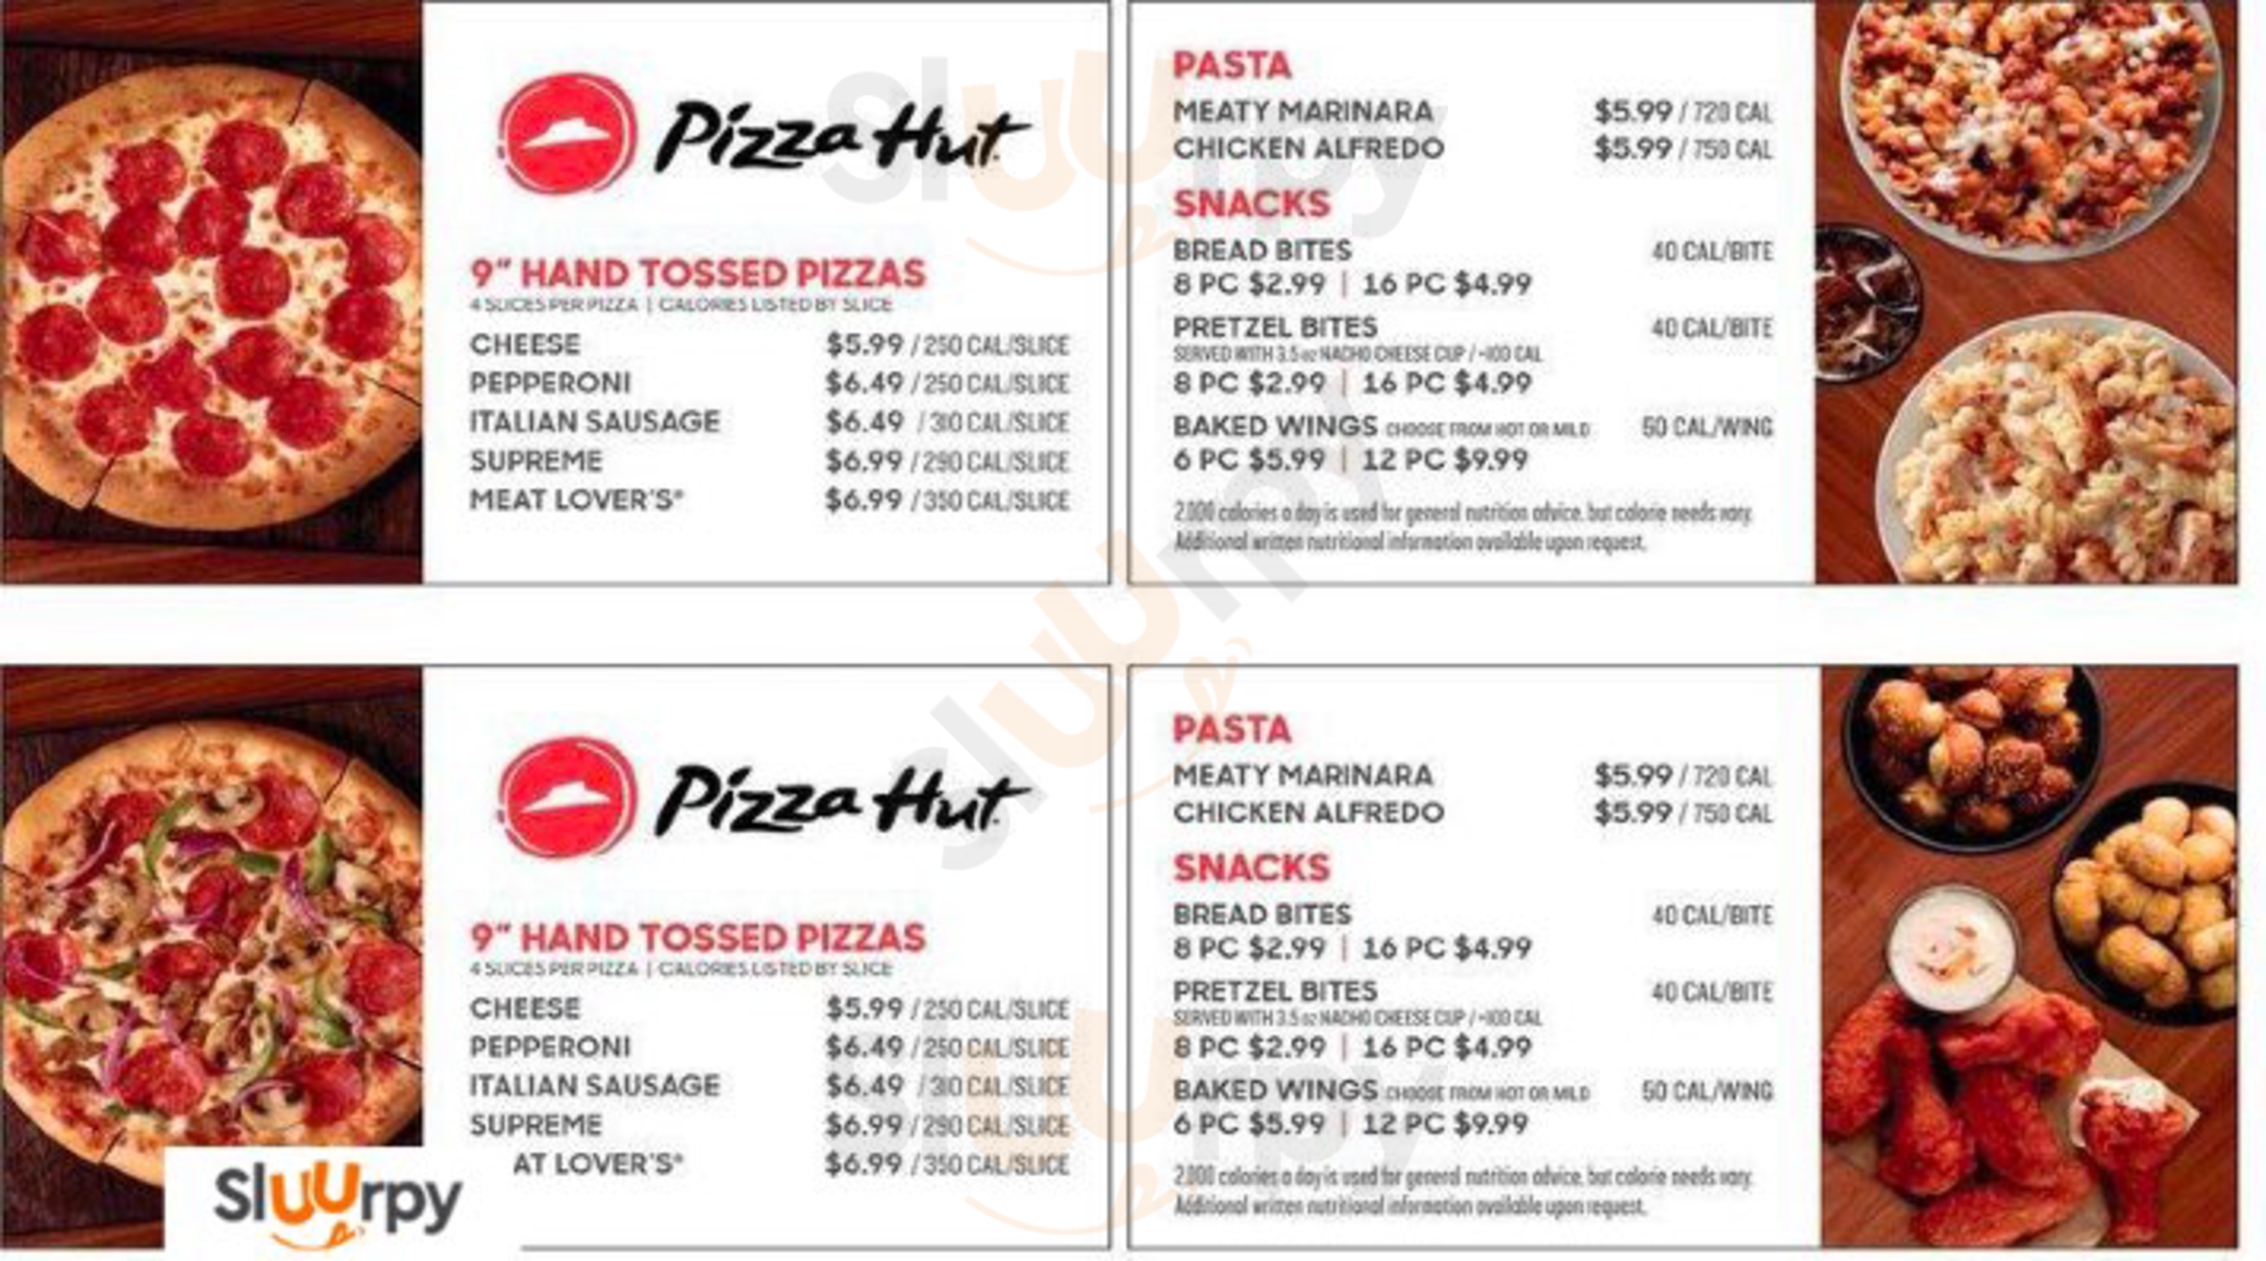 Pizza Hut Nashville Menu - 1